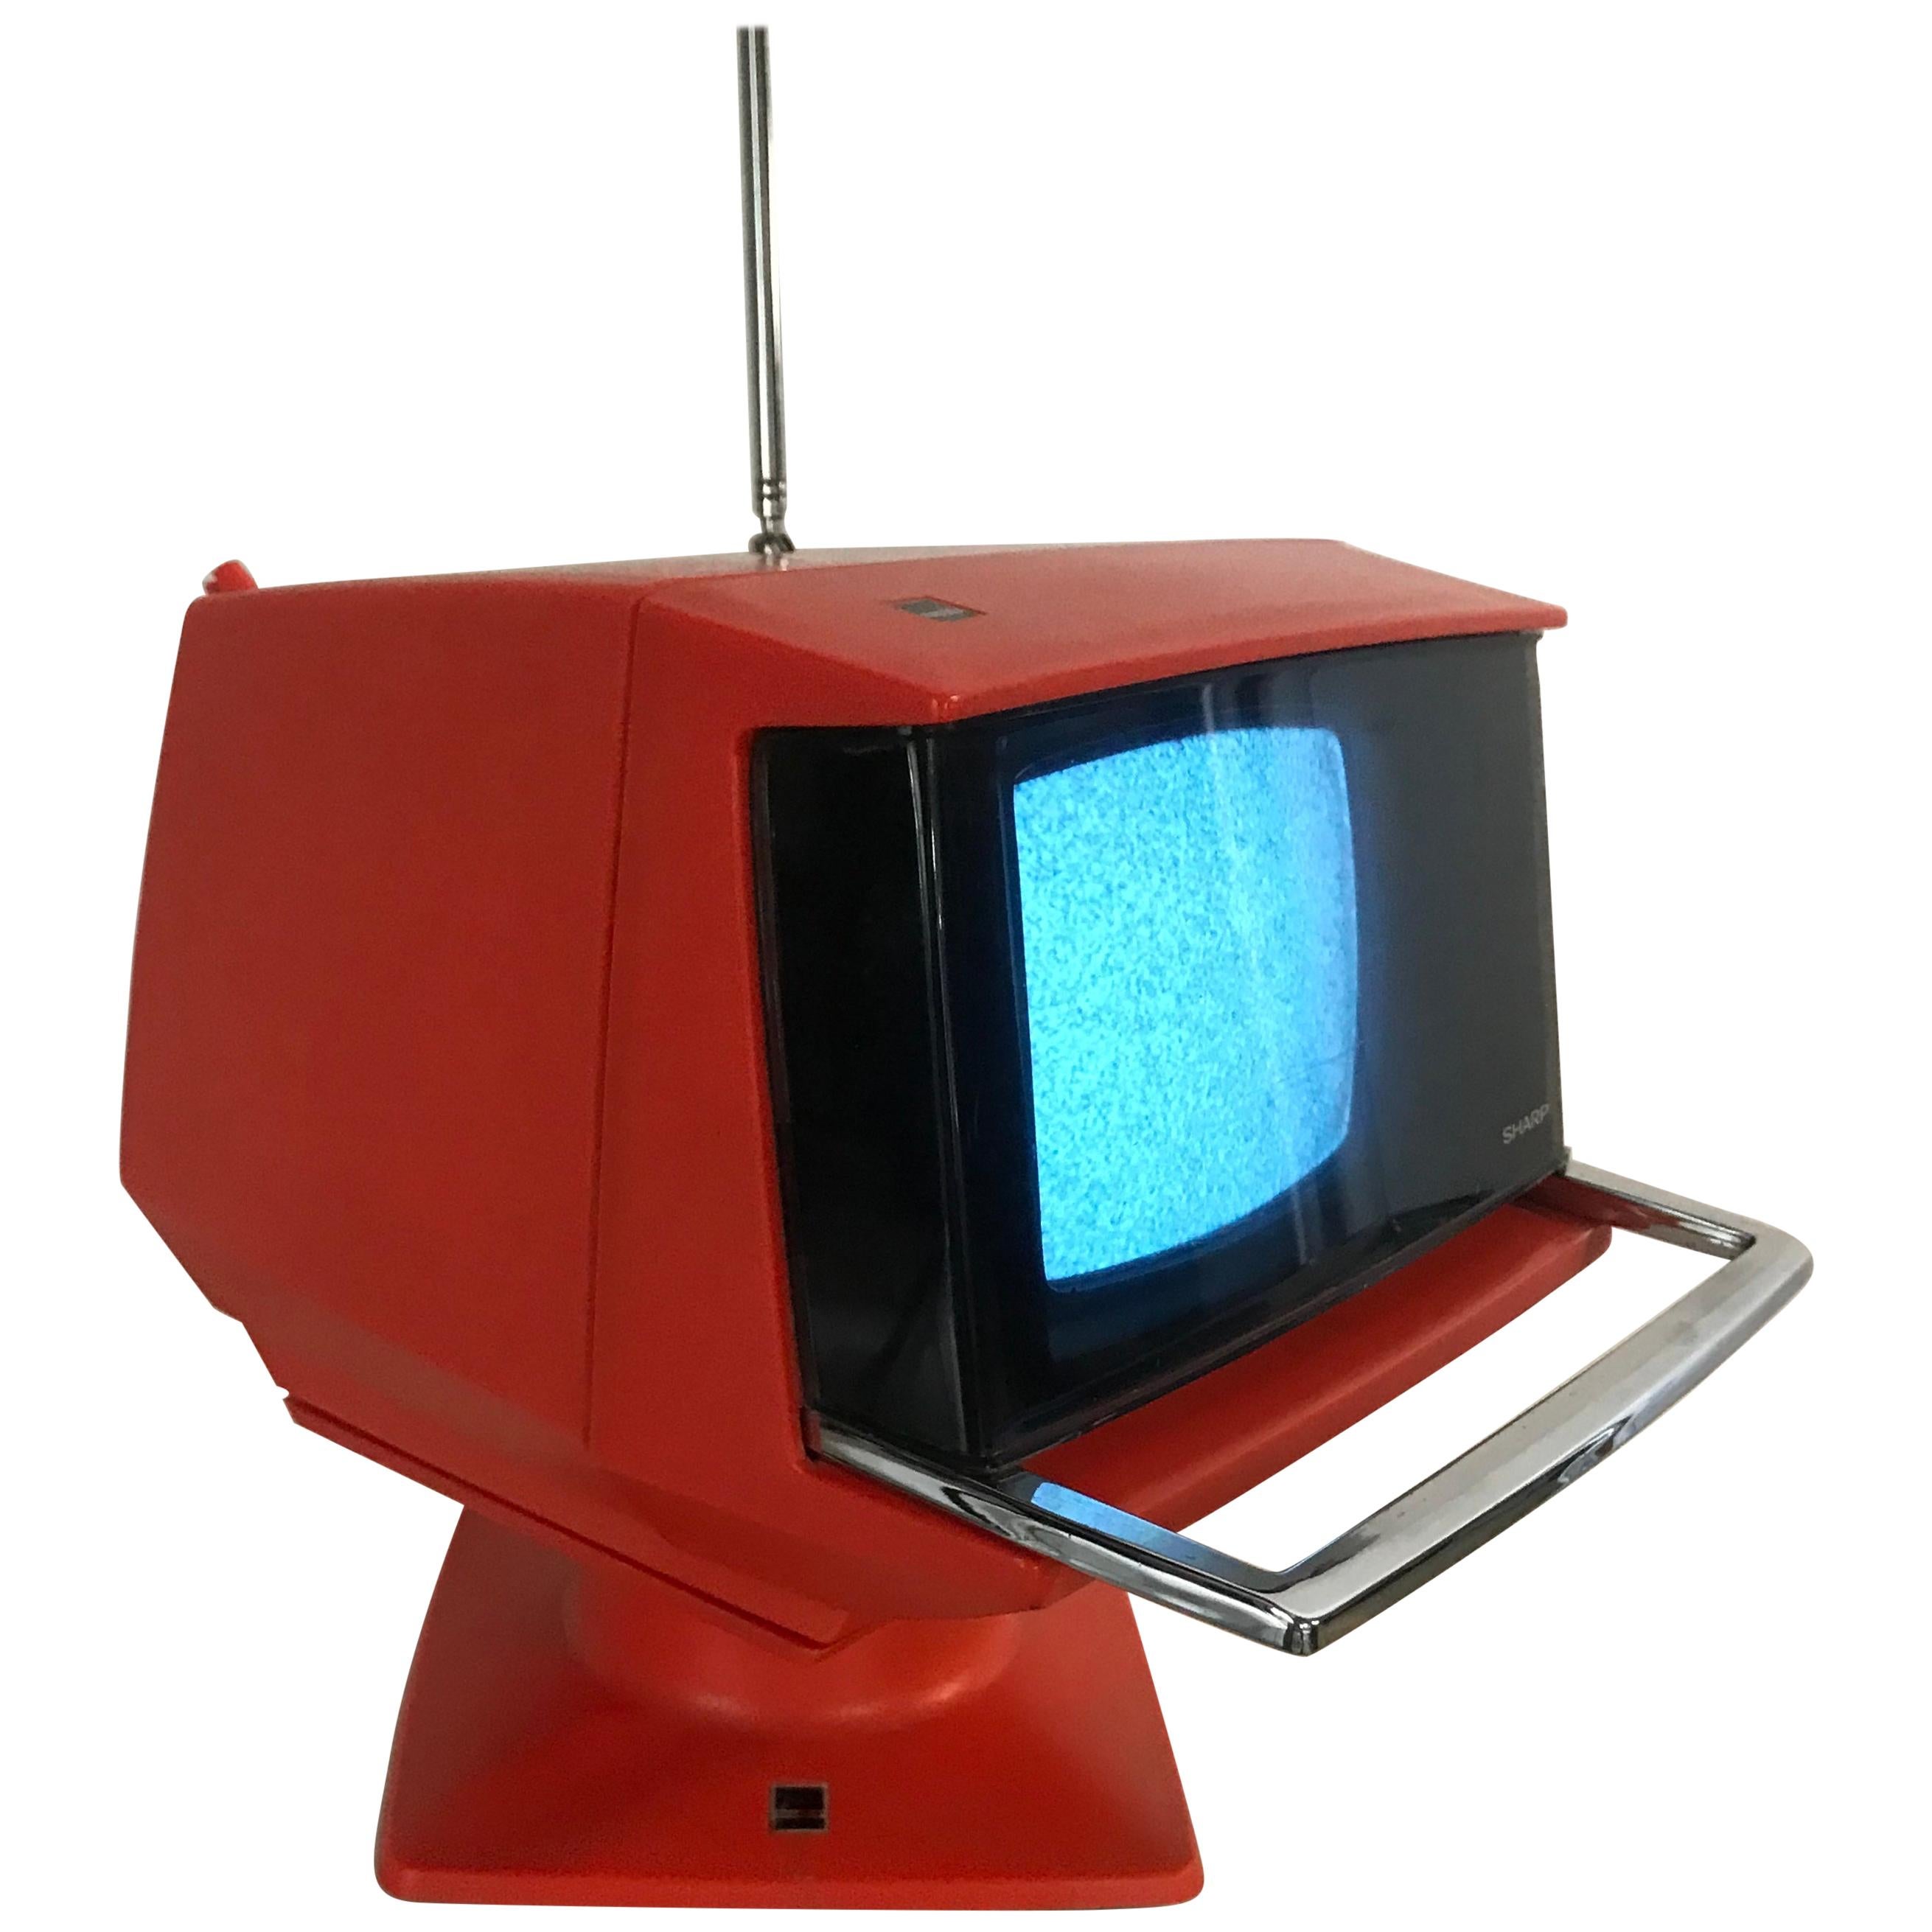 Modernist Space Age Sharp Television, Model 3s-111 R..JAPAN, circa 1970